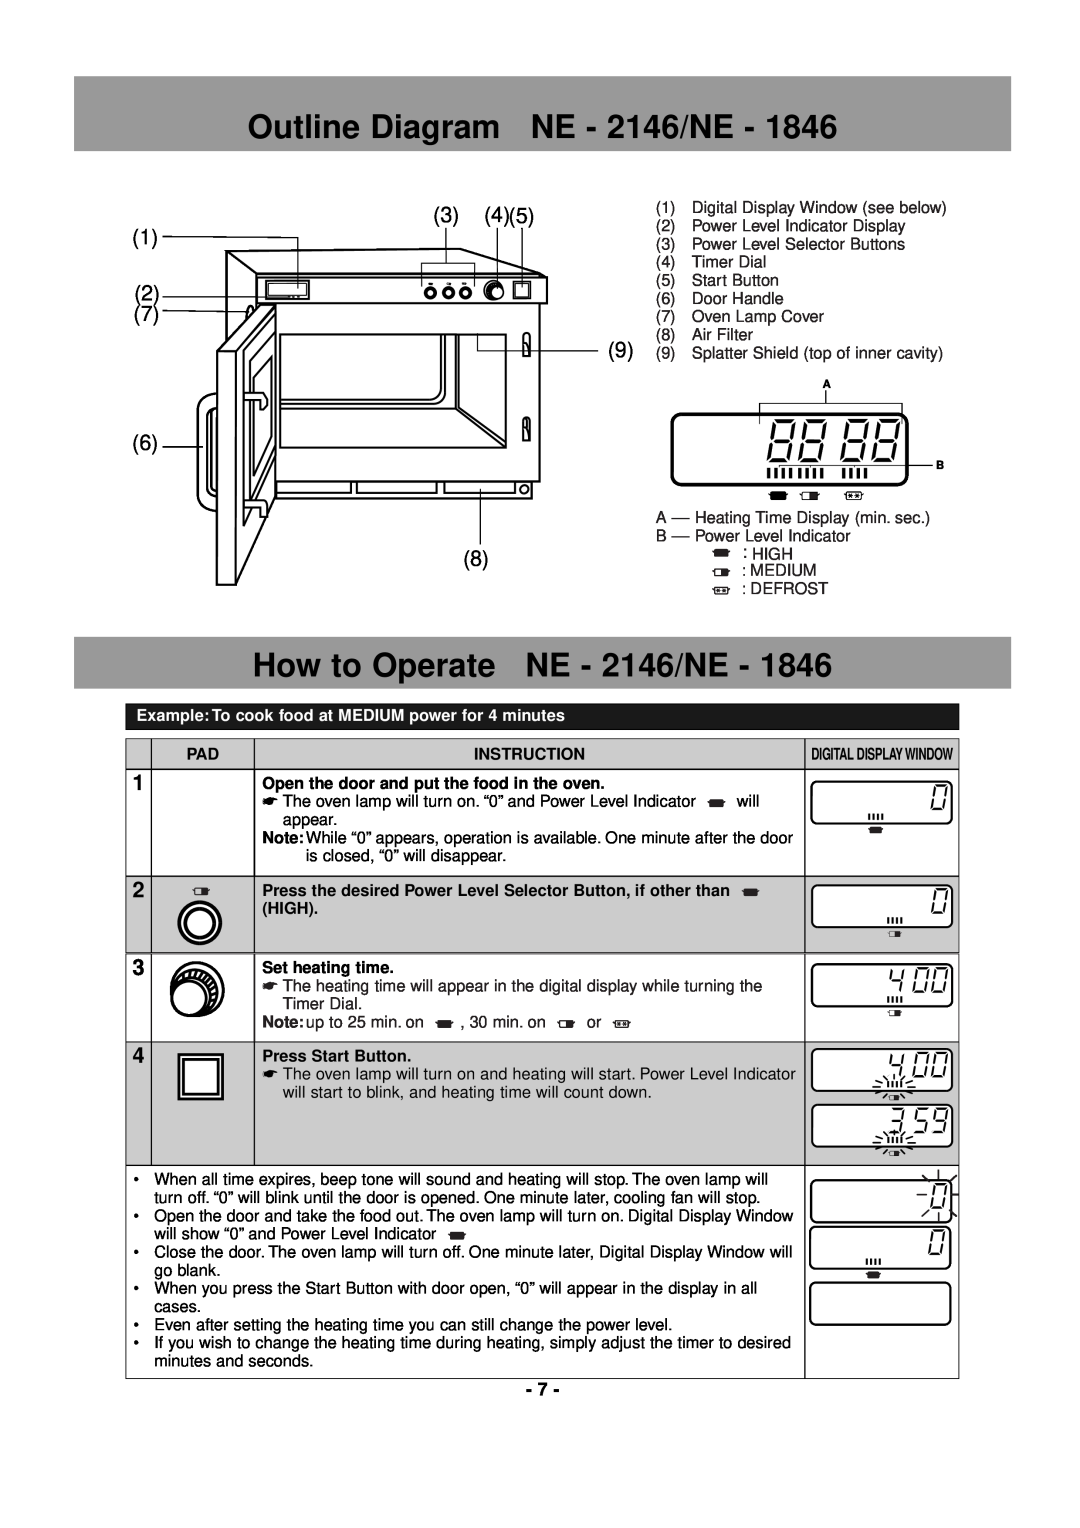 Panasonic NE-2156 Outline Diagram, How to Operate NE - 2146/NE, Instruction, Set heating time, Press Start Button 